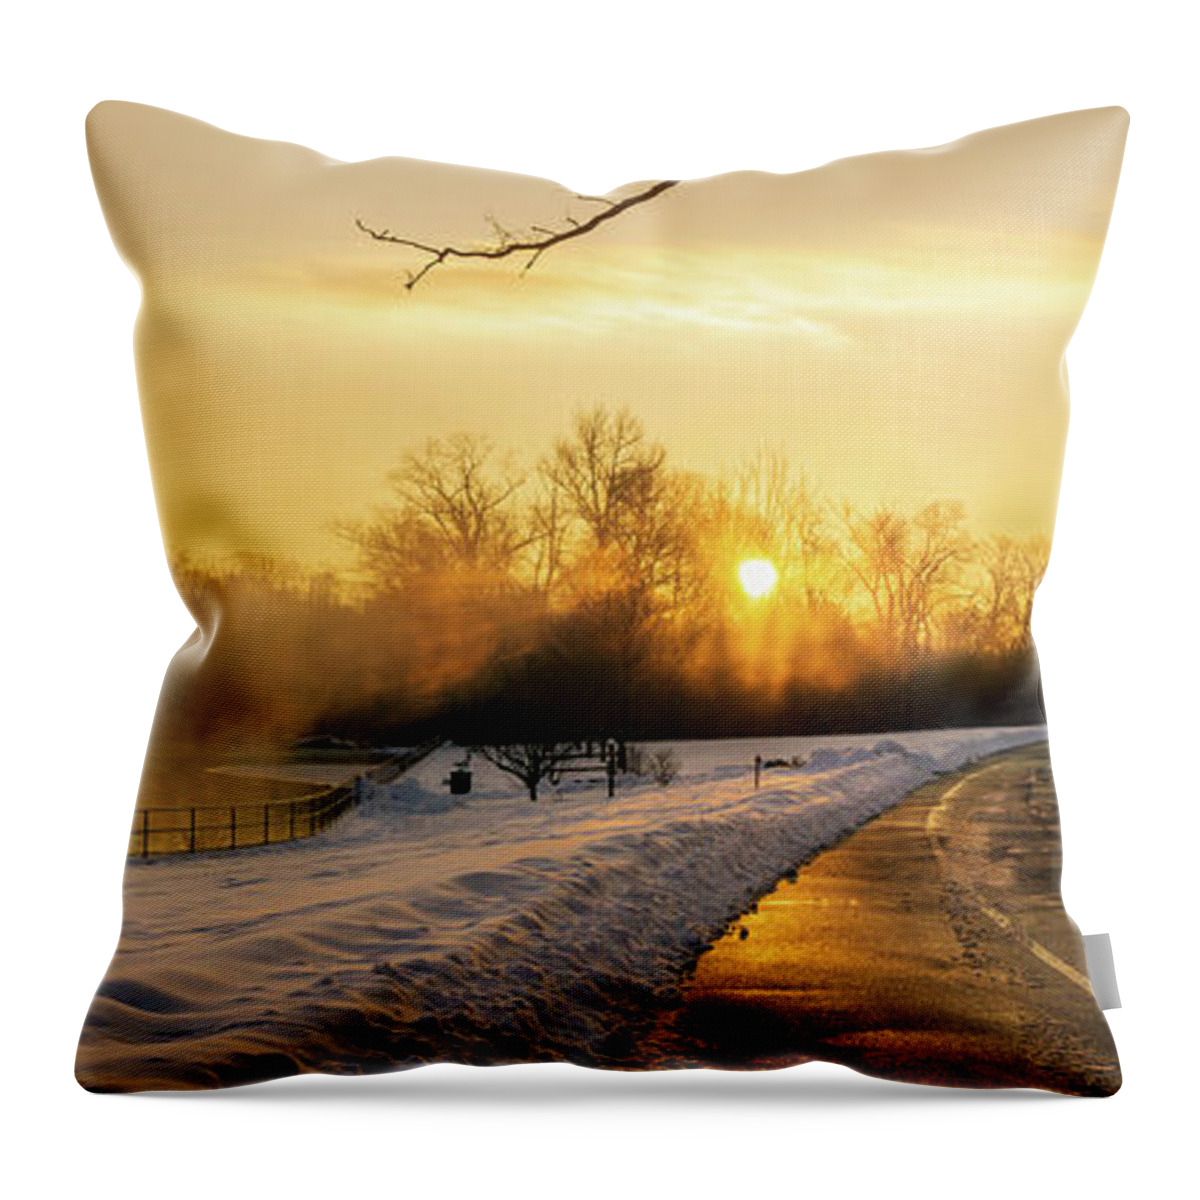 Snow Throw Pillow featuring the photograph Trexler Park Pond Foggy Winter Sunrise by Jason Fink